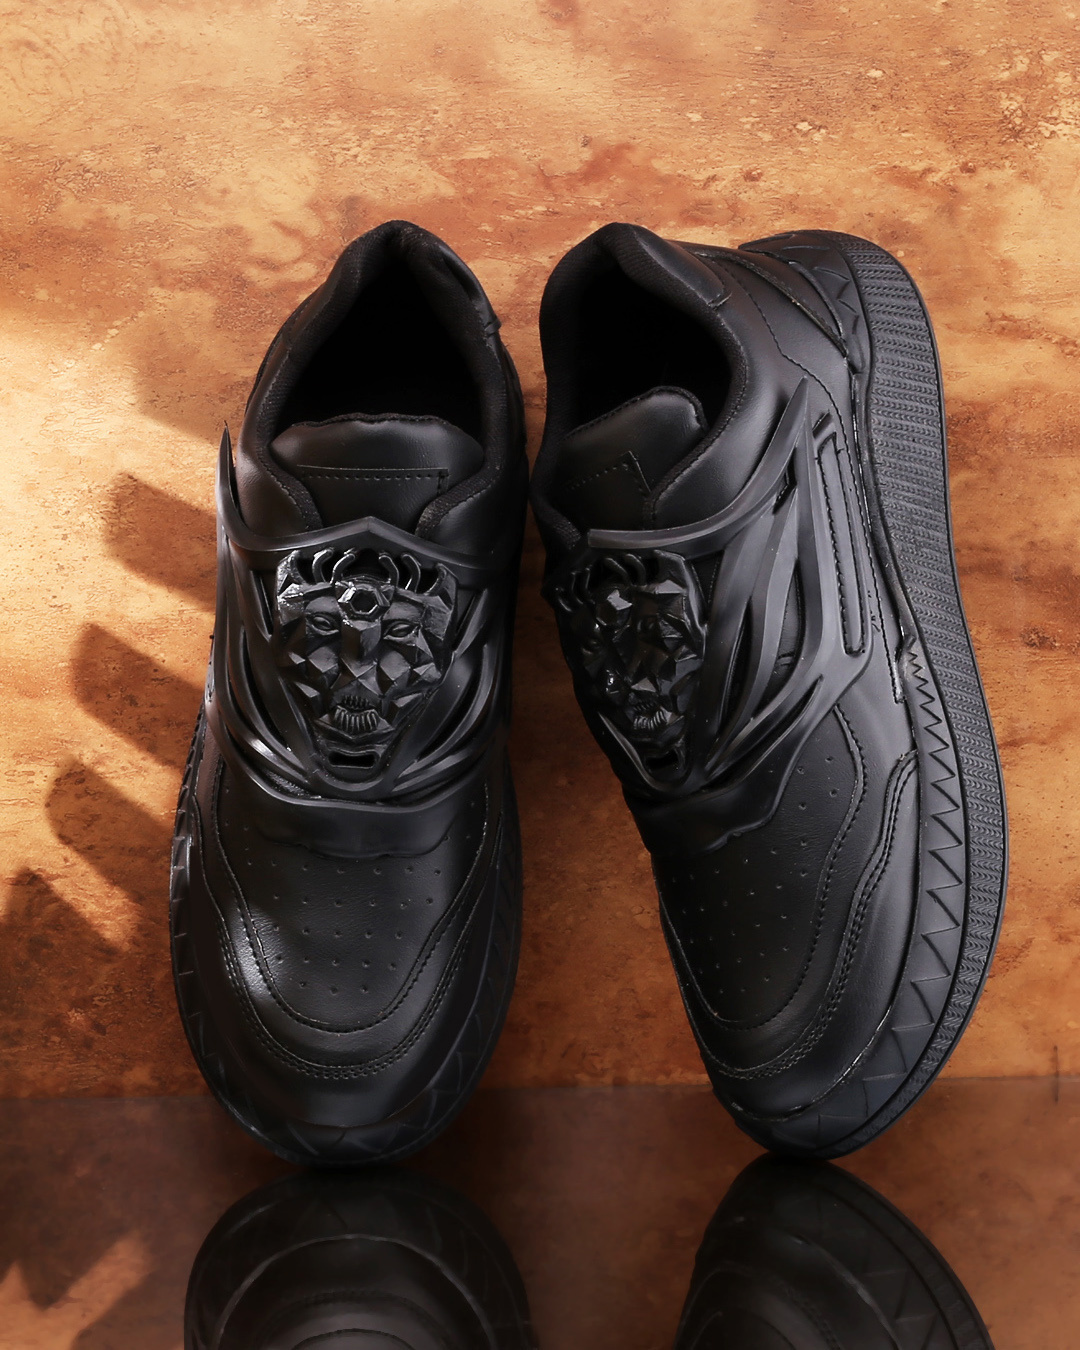 Buy Men's Black Sneakers Online in India at Bewakoof